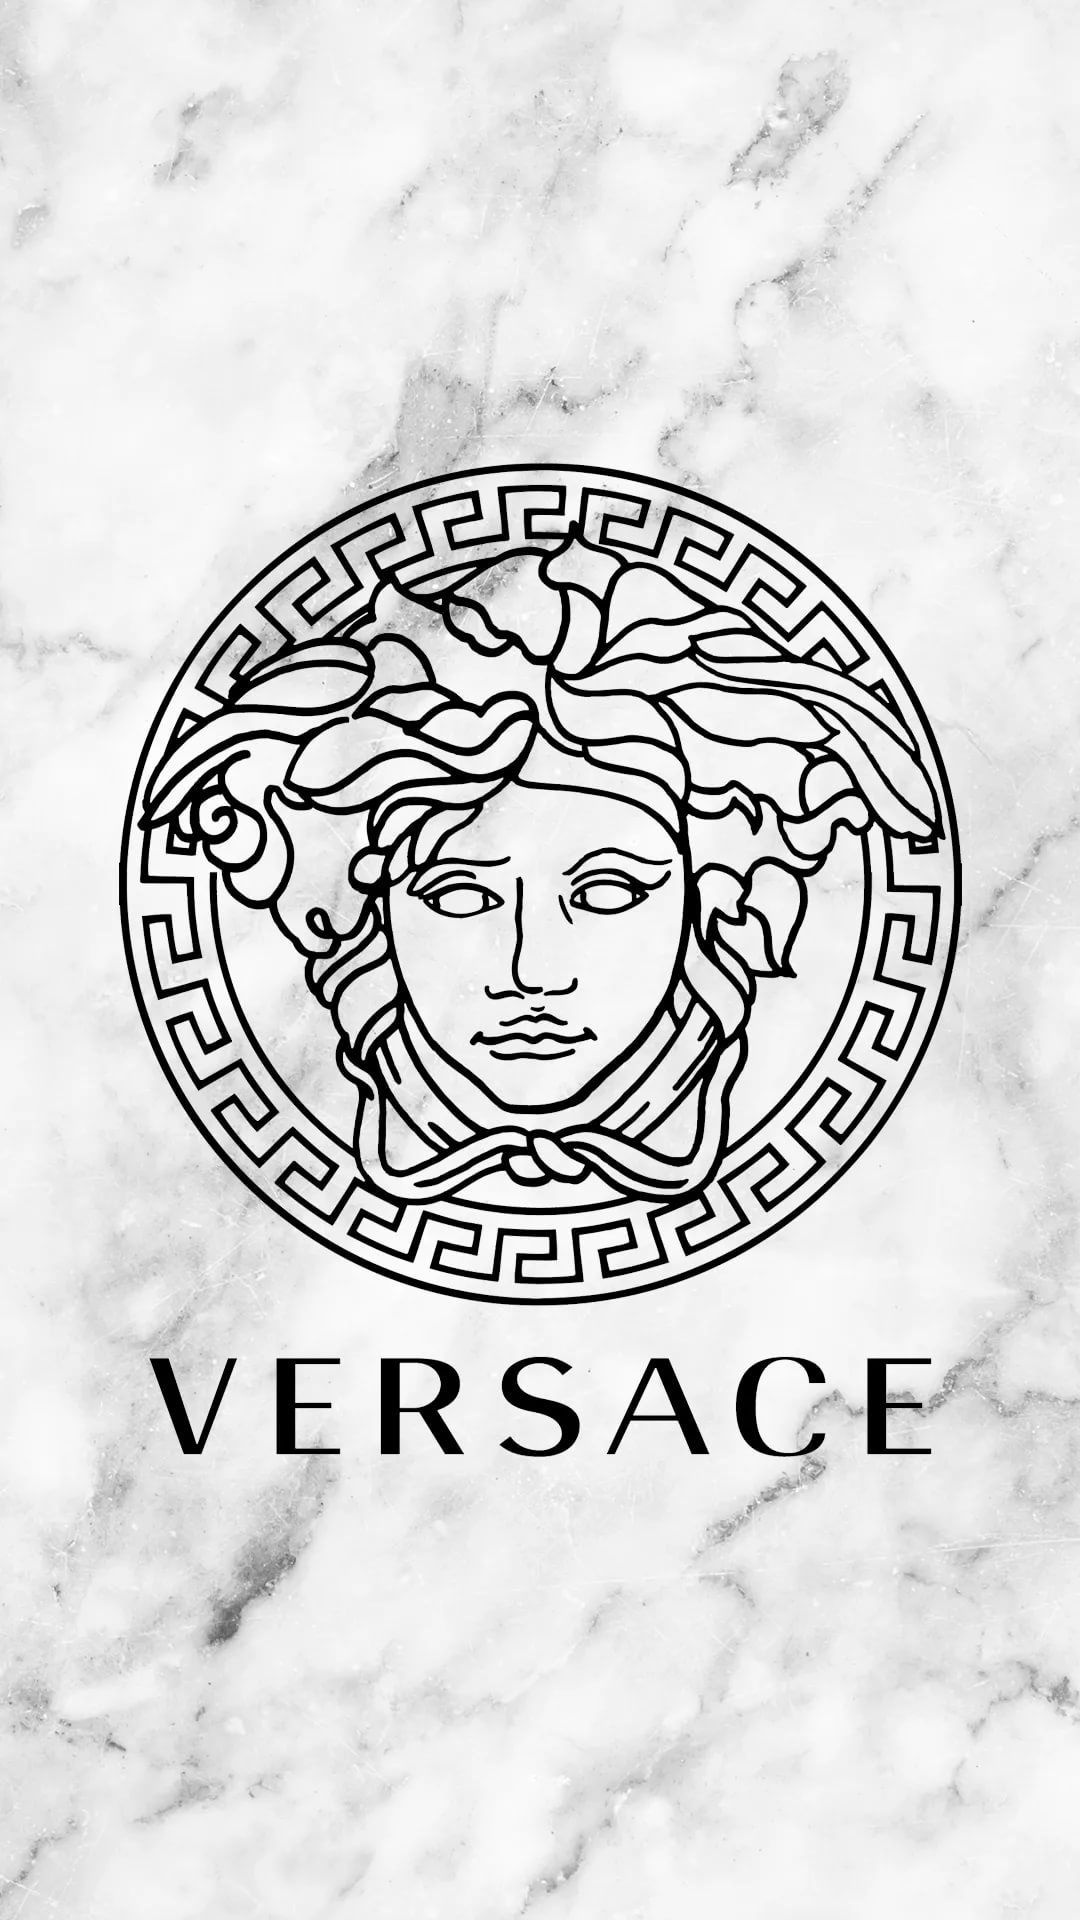 Versace: A notable emblem, The Medusa's head, The brand's symbol. 1080x1920 Full HD Wallpaper.